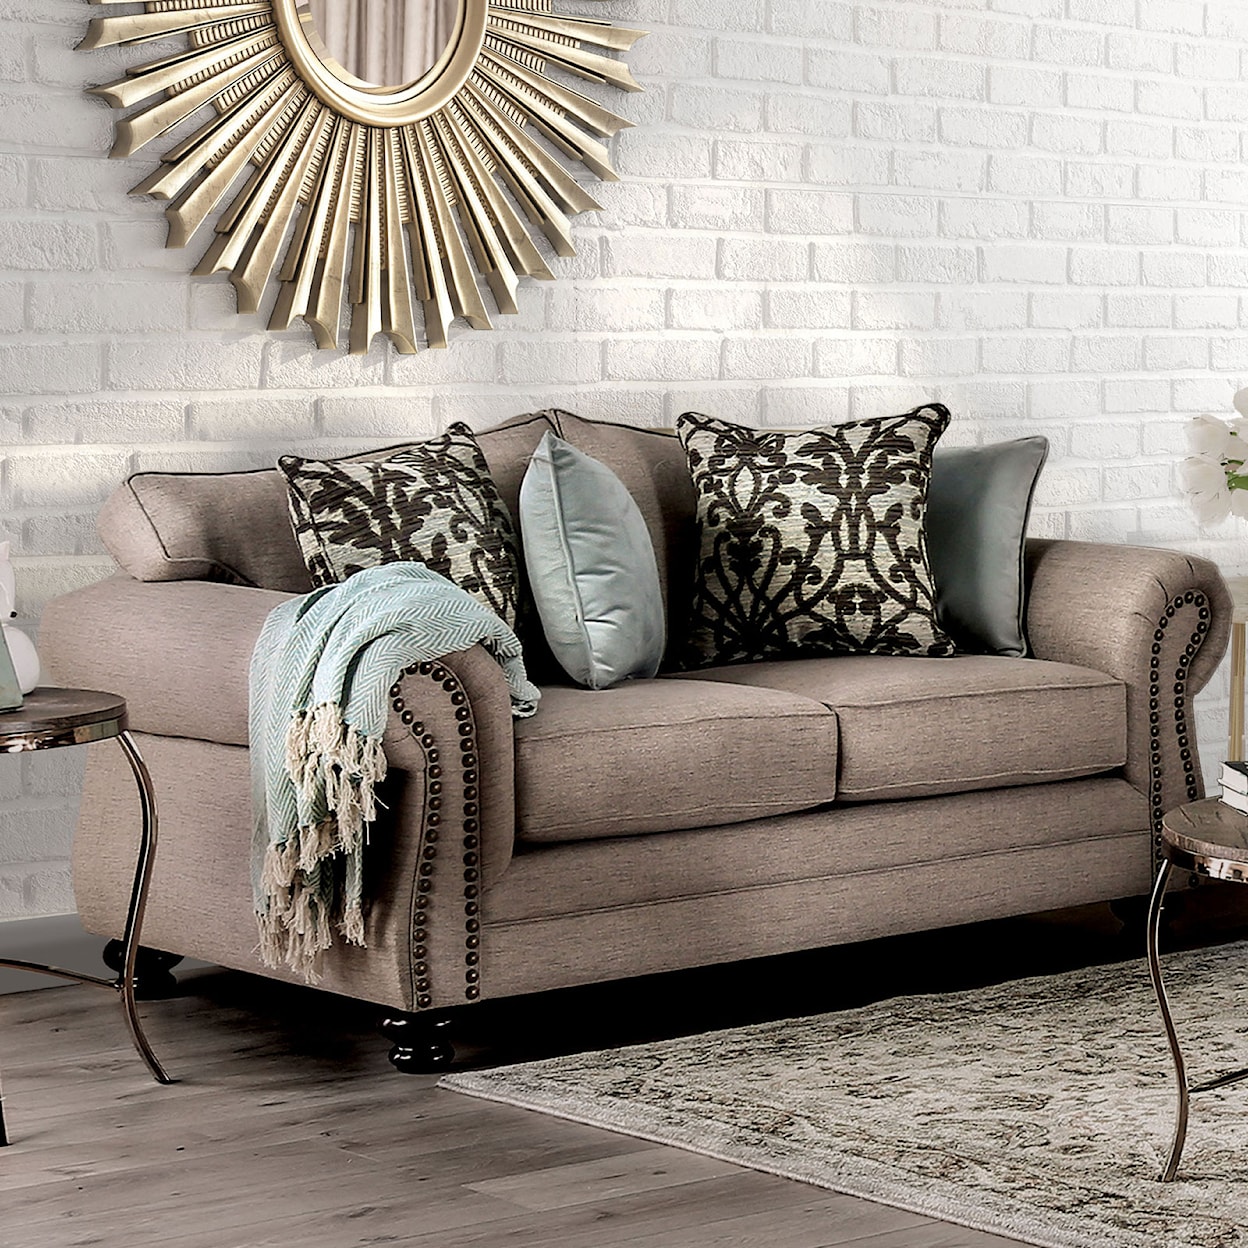 Furniture of America Jarauld Sofa and Loveseat Set